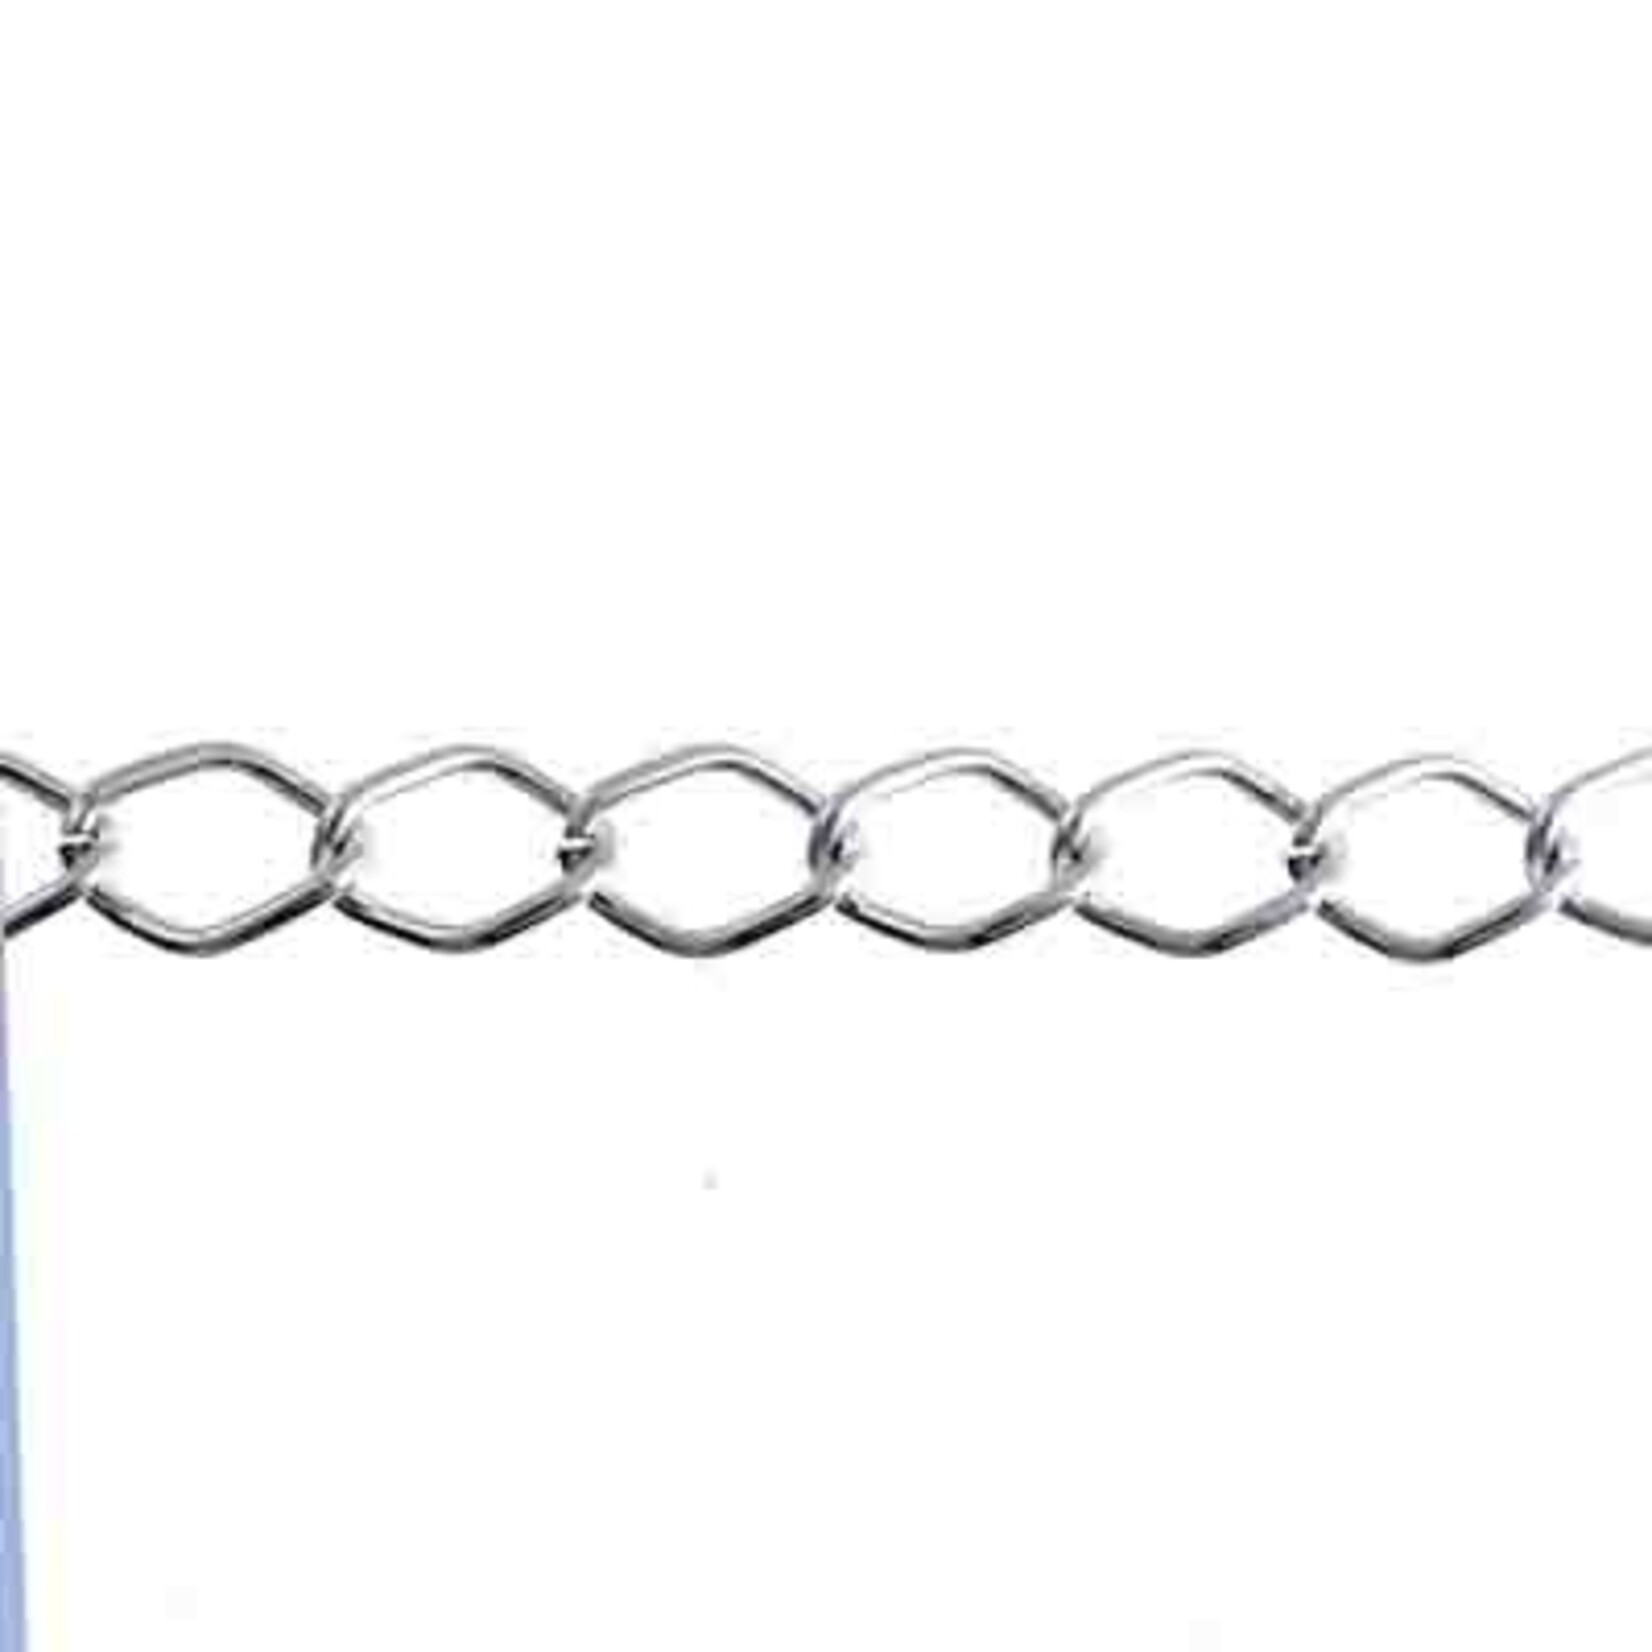 Aluminum Chain 50m/spool Silver 11 x 8mm